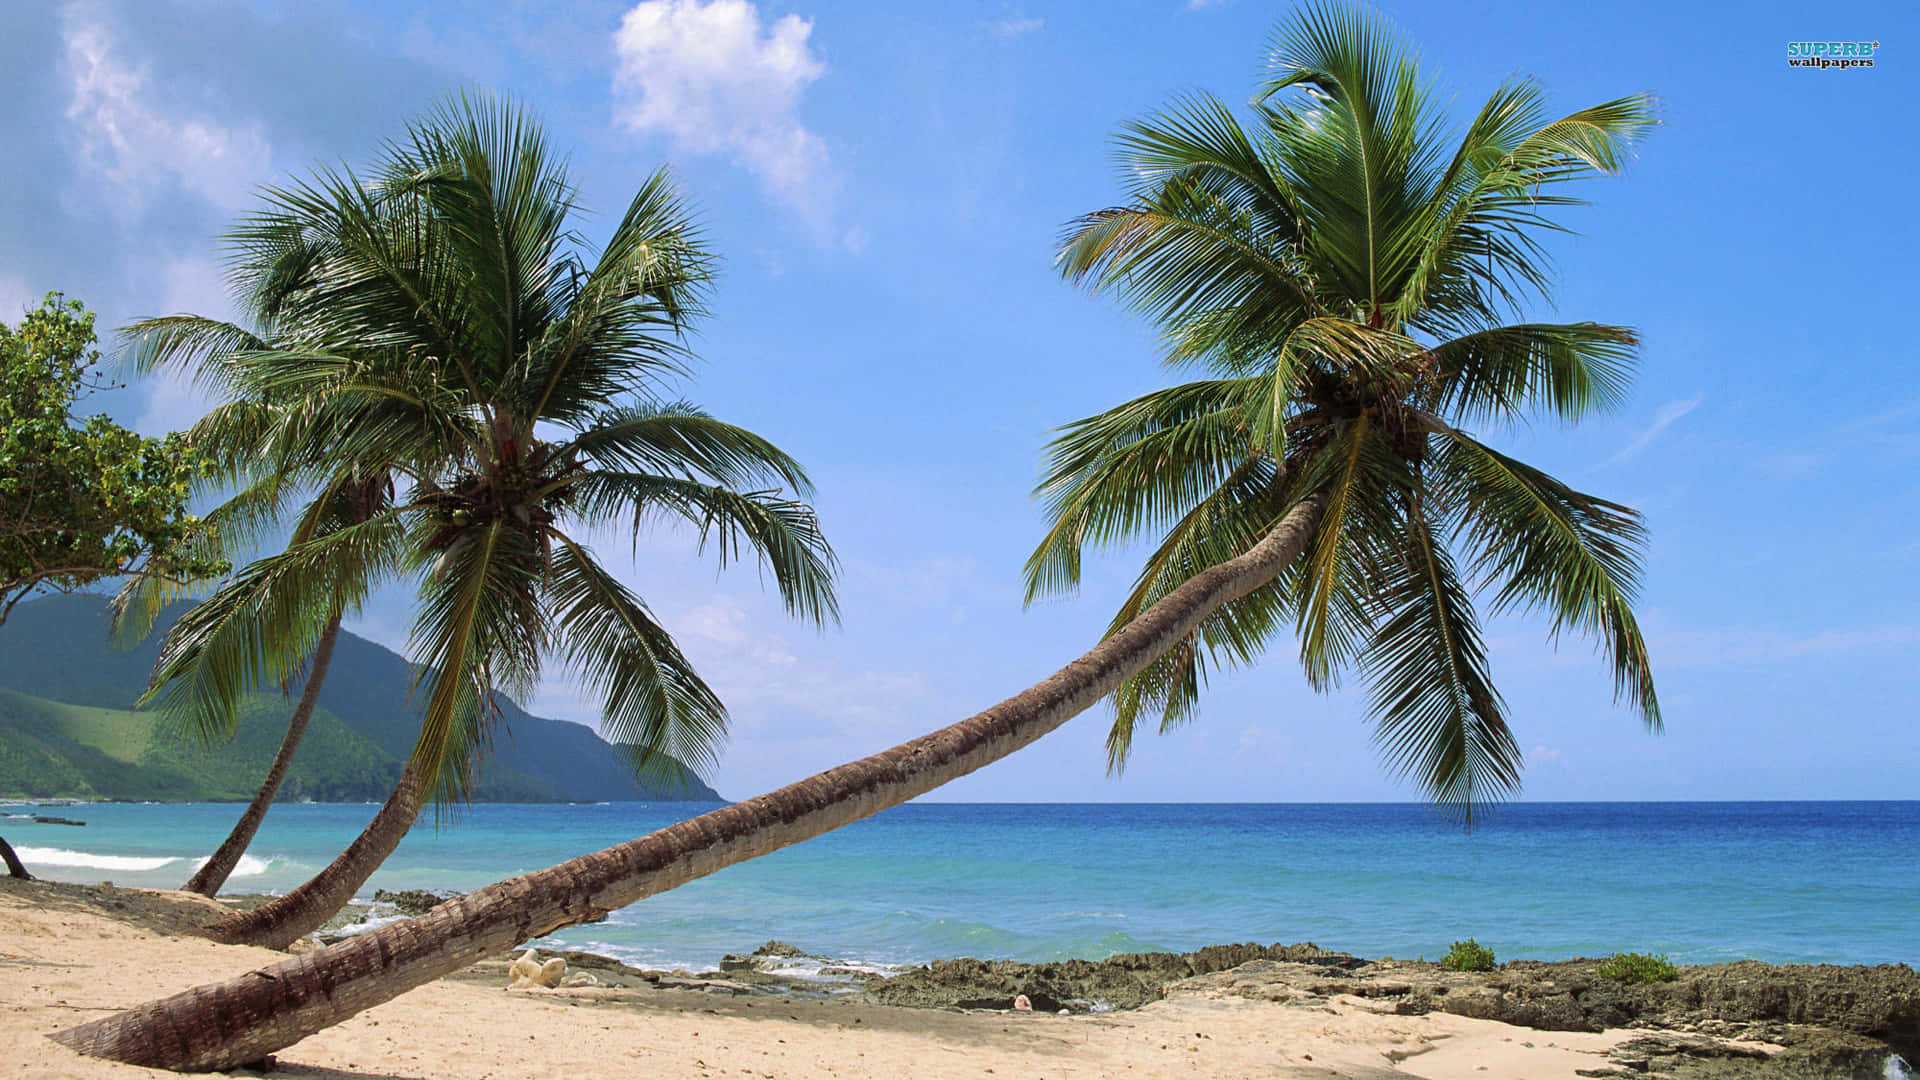 A tropical palm tree overlooking a serene beach Wallpaper